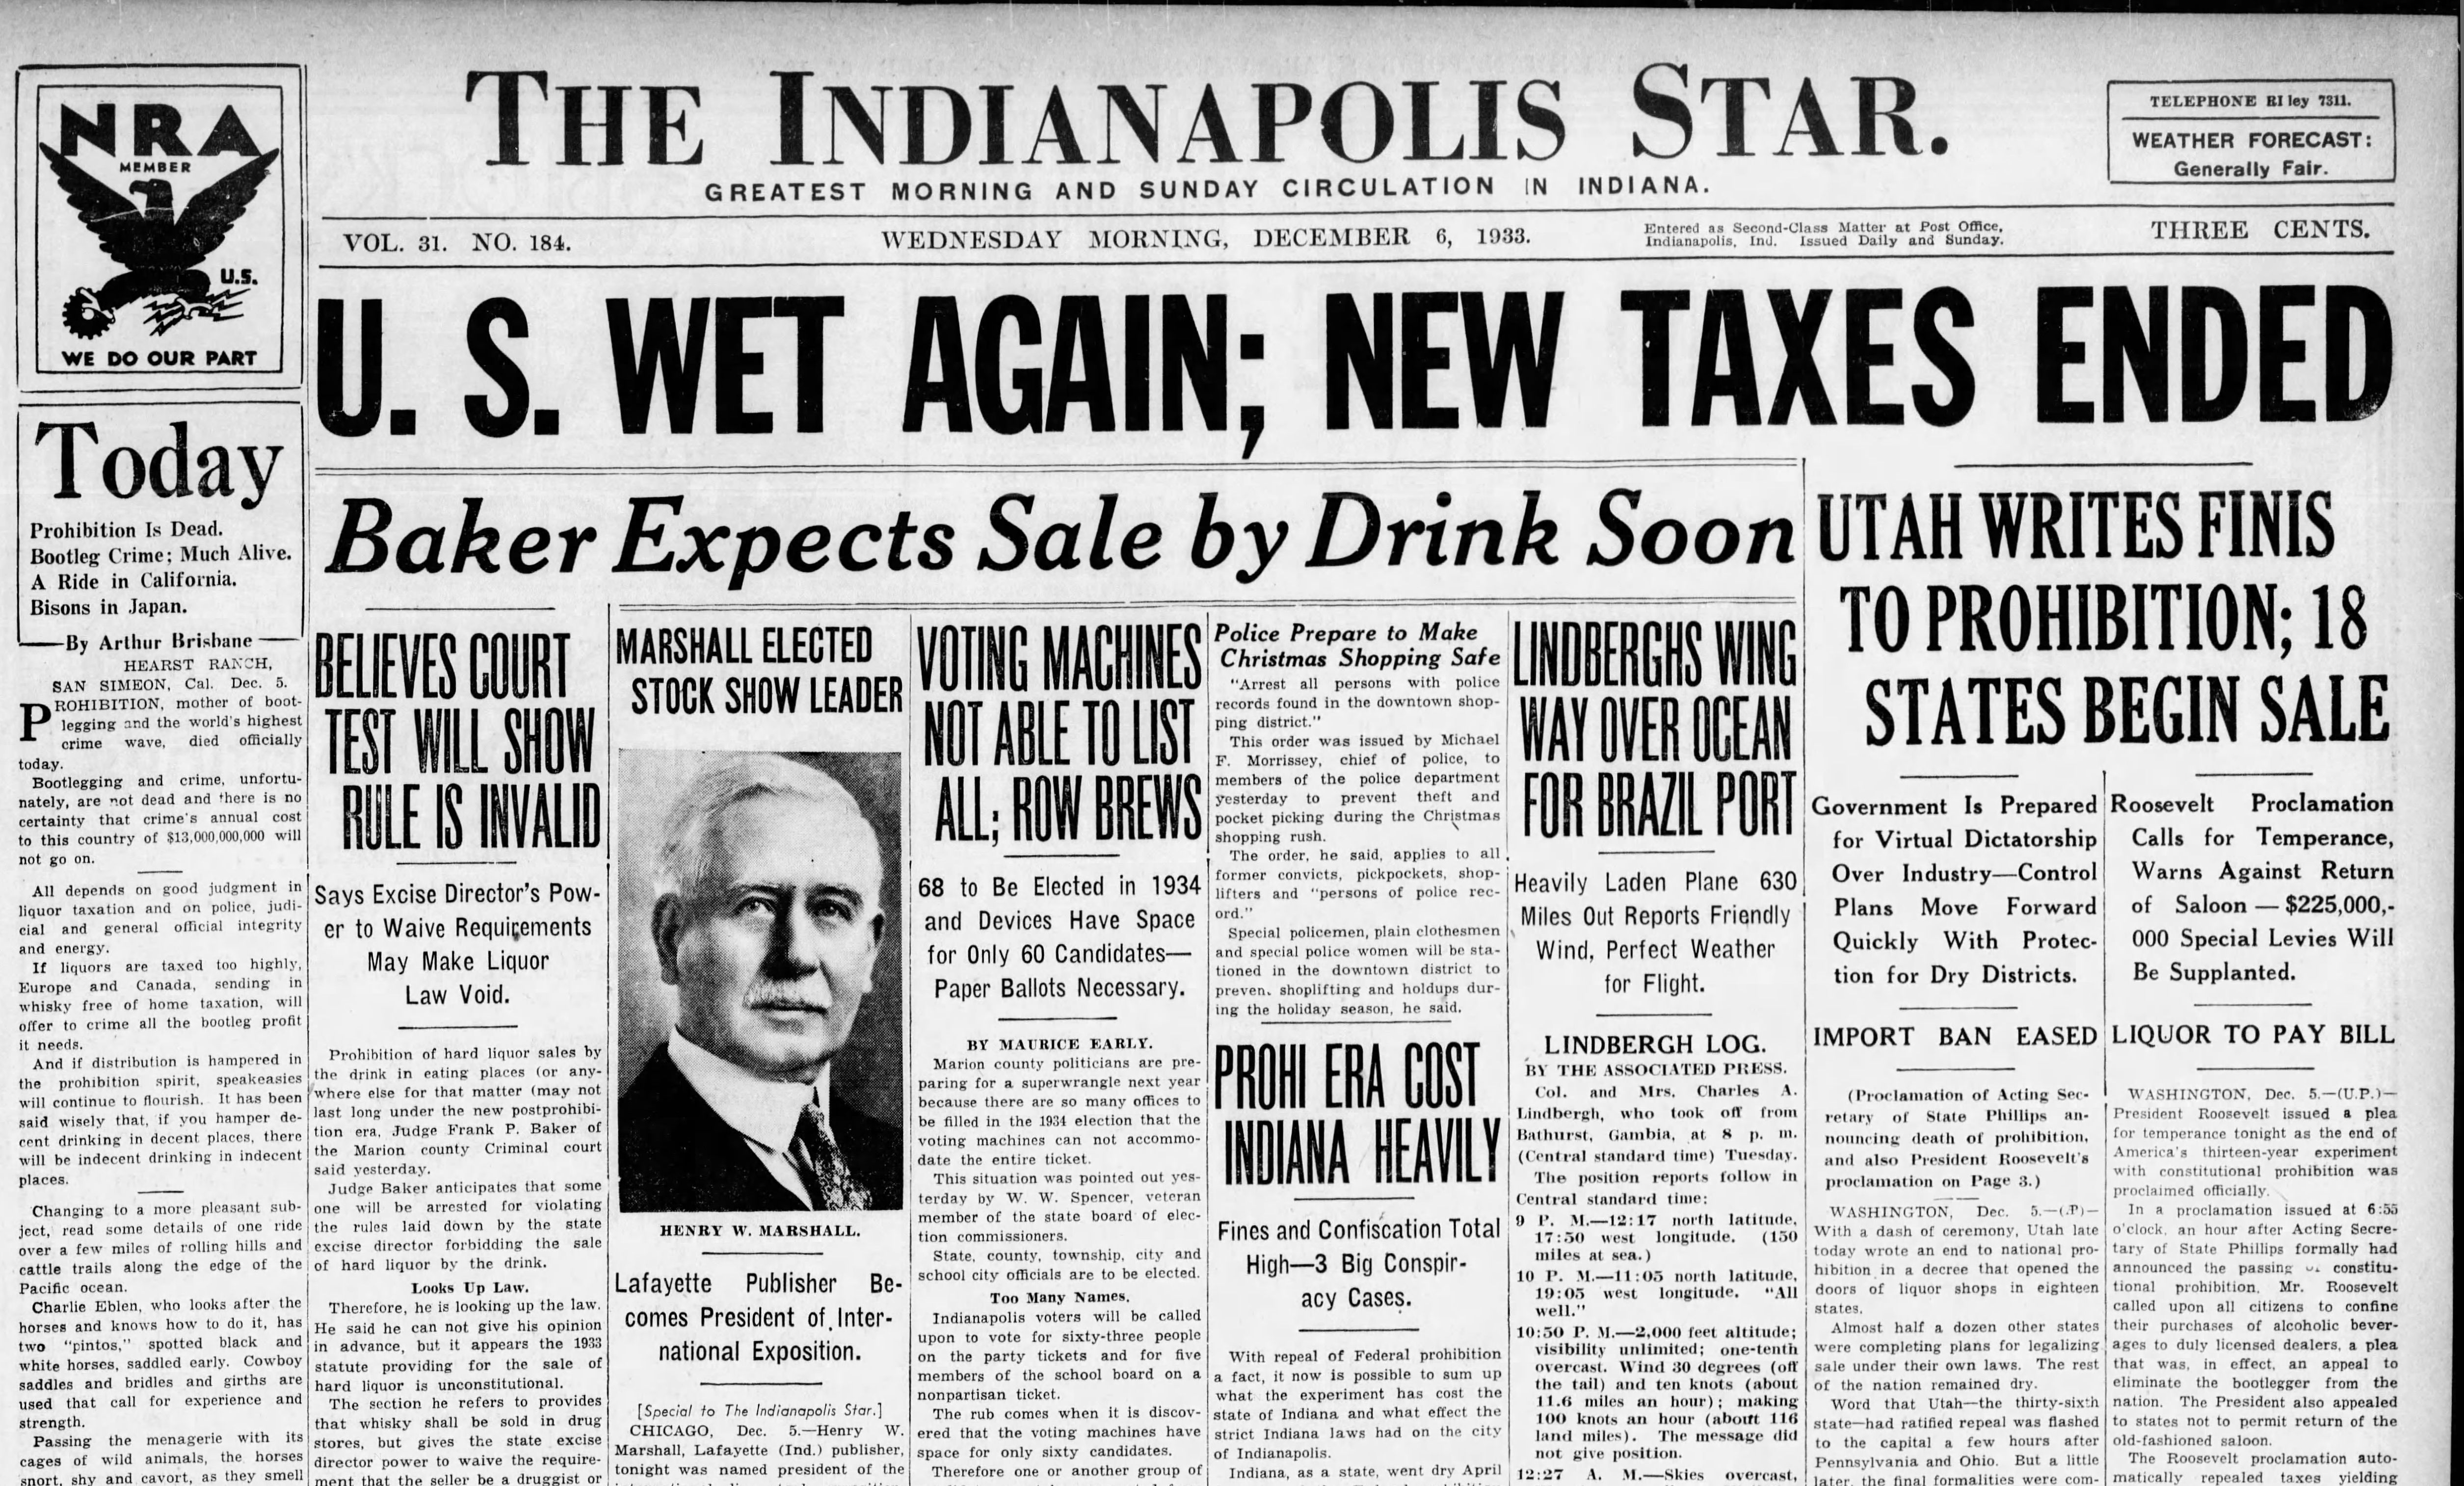 Dec. 6, 1933 headline shows the end of Prohibition.